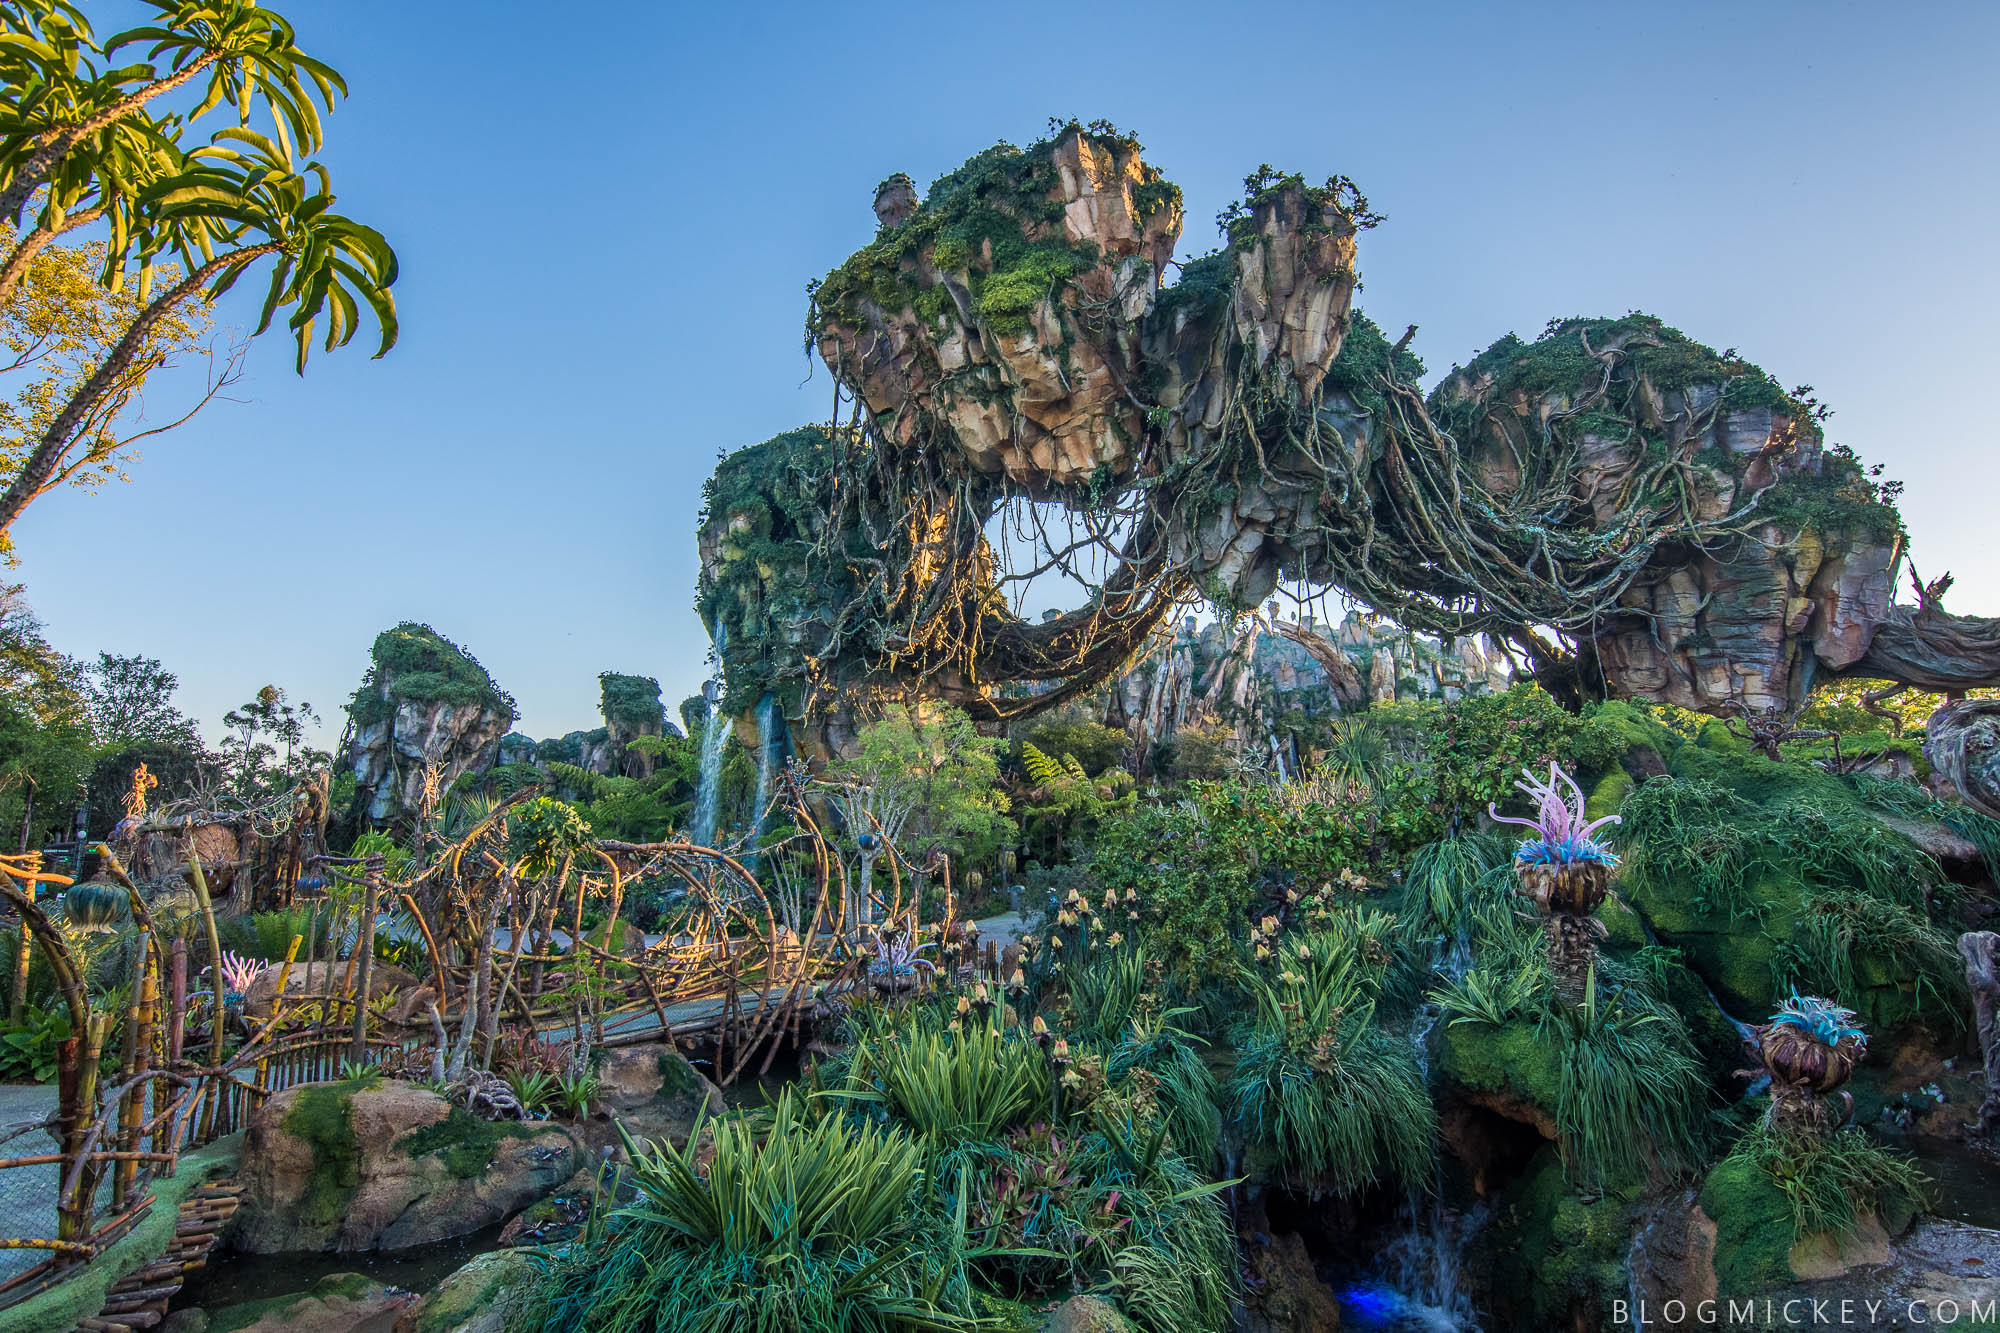 PHOTOS: Look Around the Environment Pandora - The of Avatar